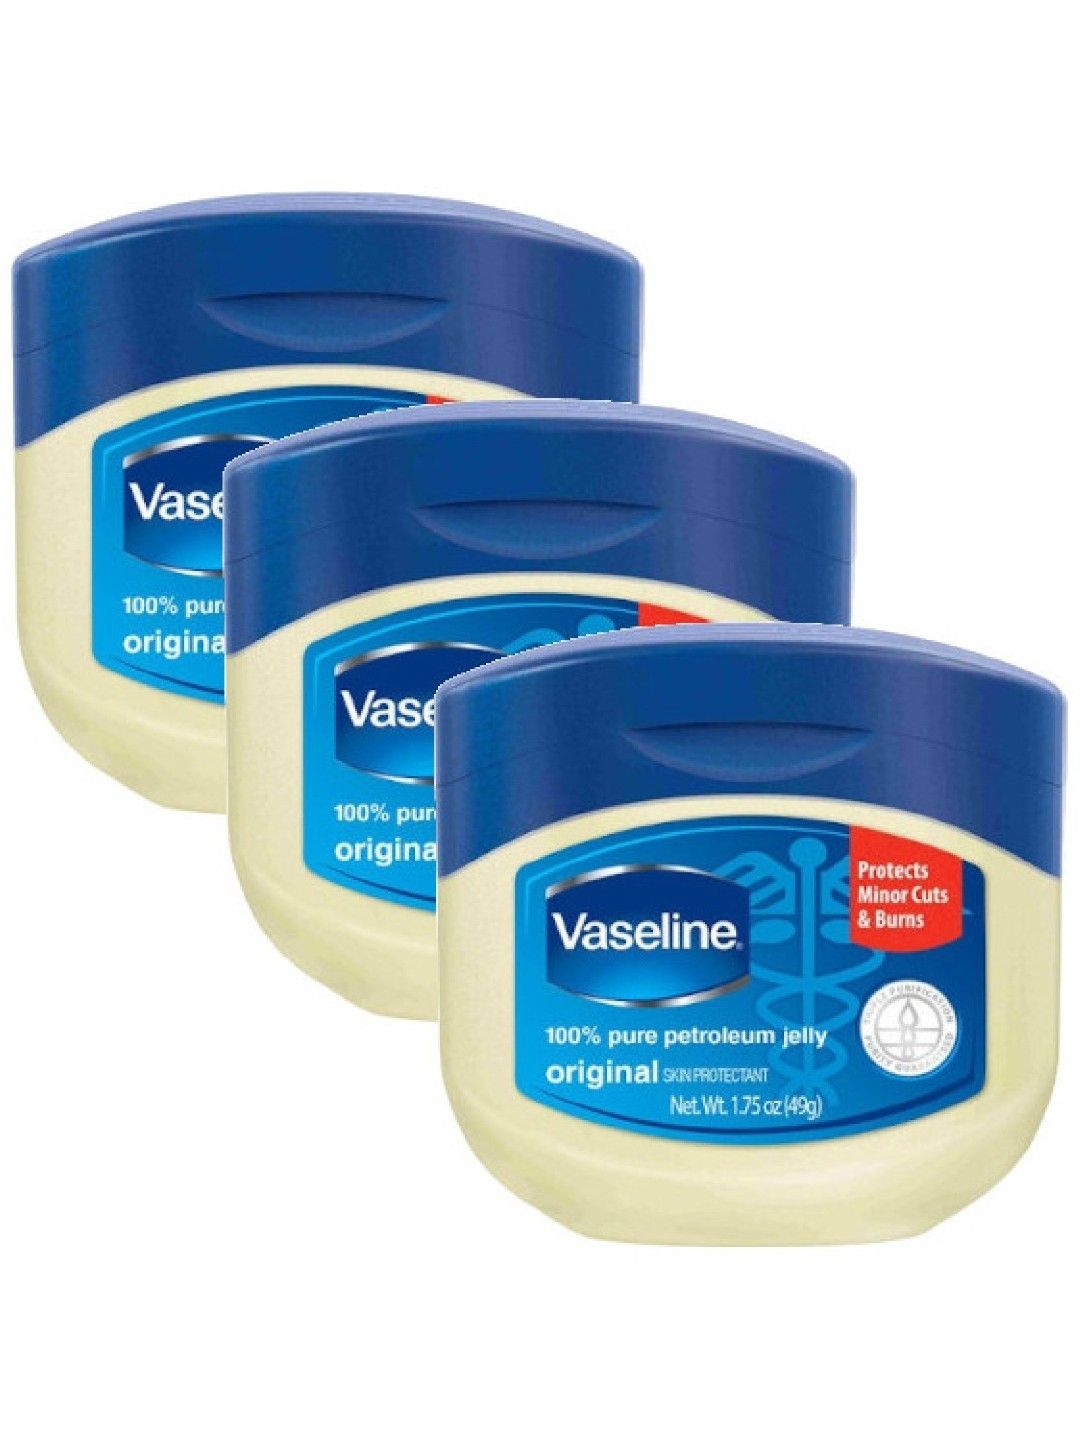 Vaseline Petroleum Jelly Original Bundle of 3 (50ml)